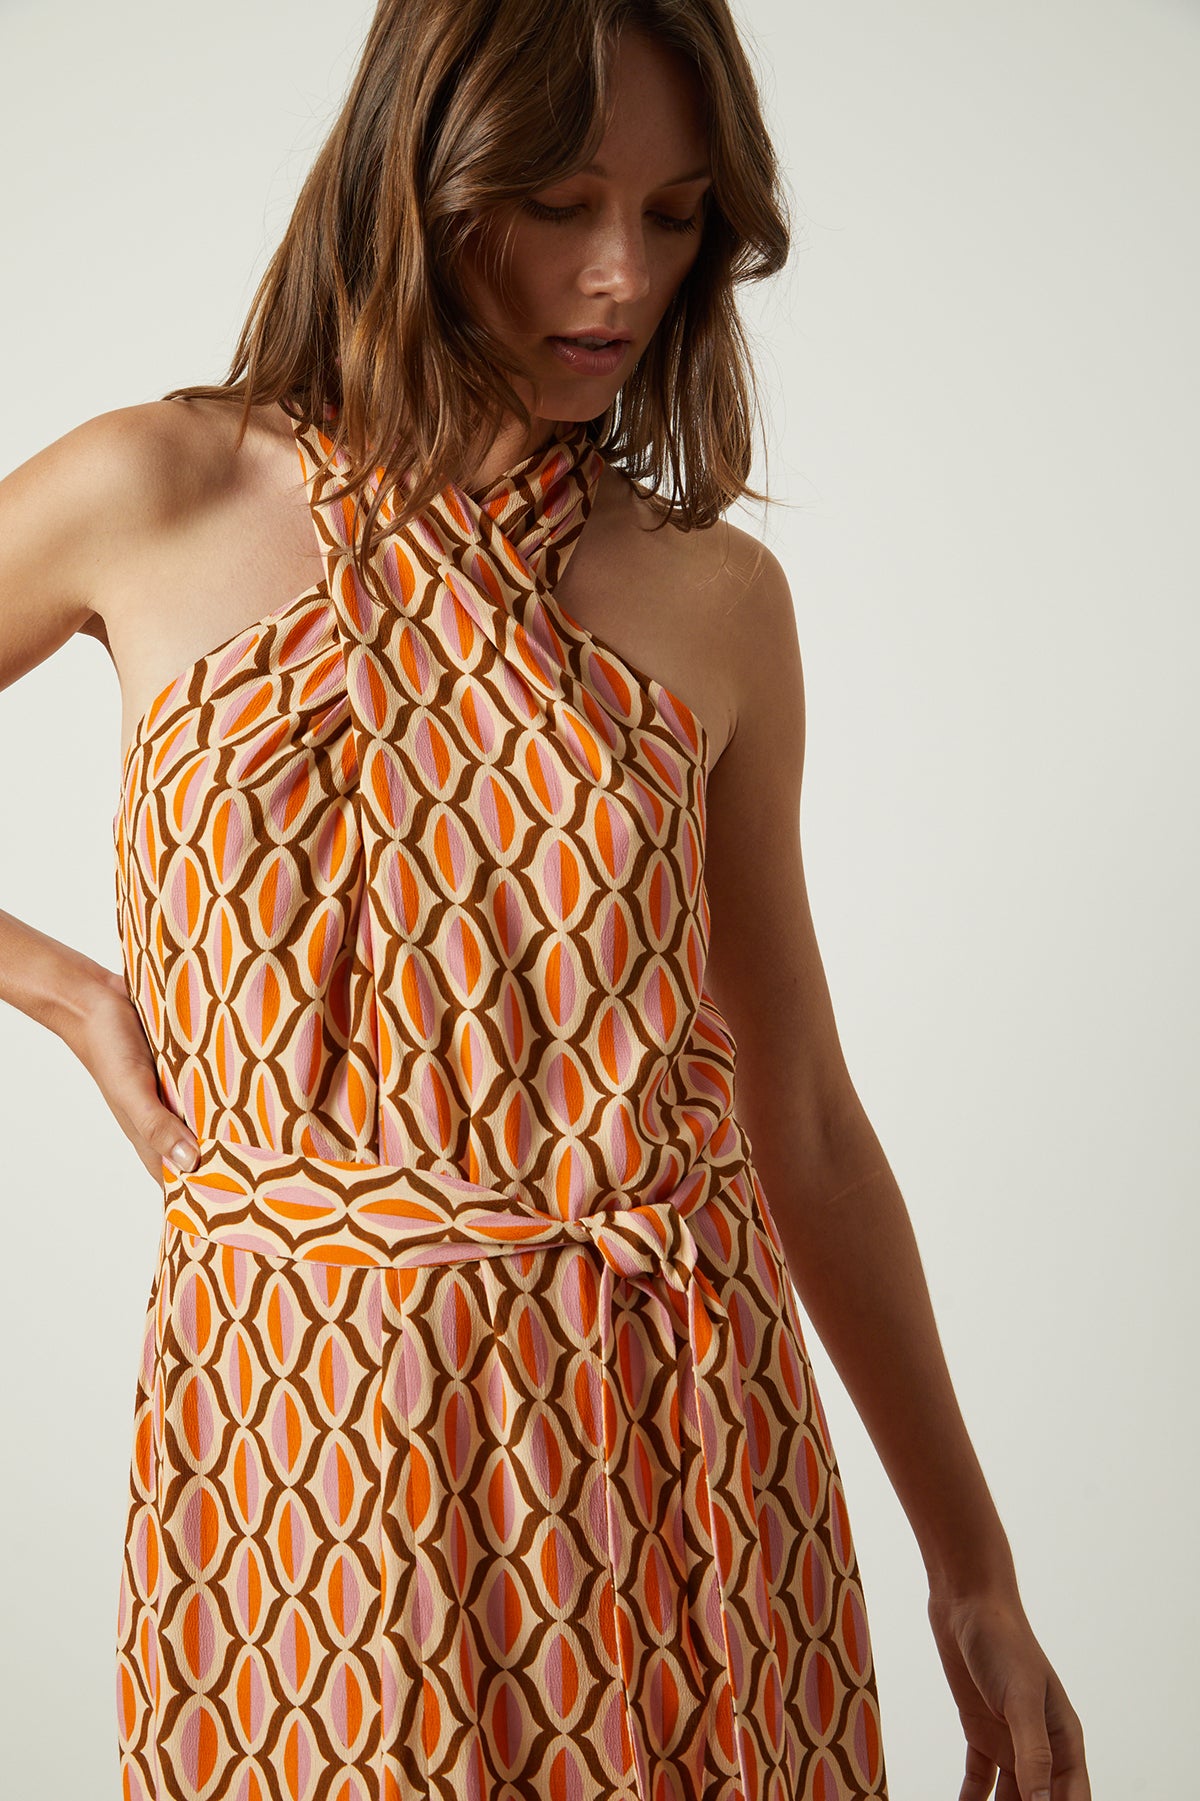   Caterina dress in orange geometric pattern close up front detail 